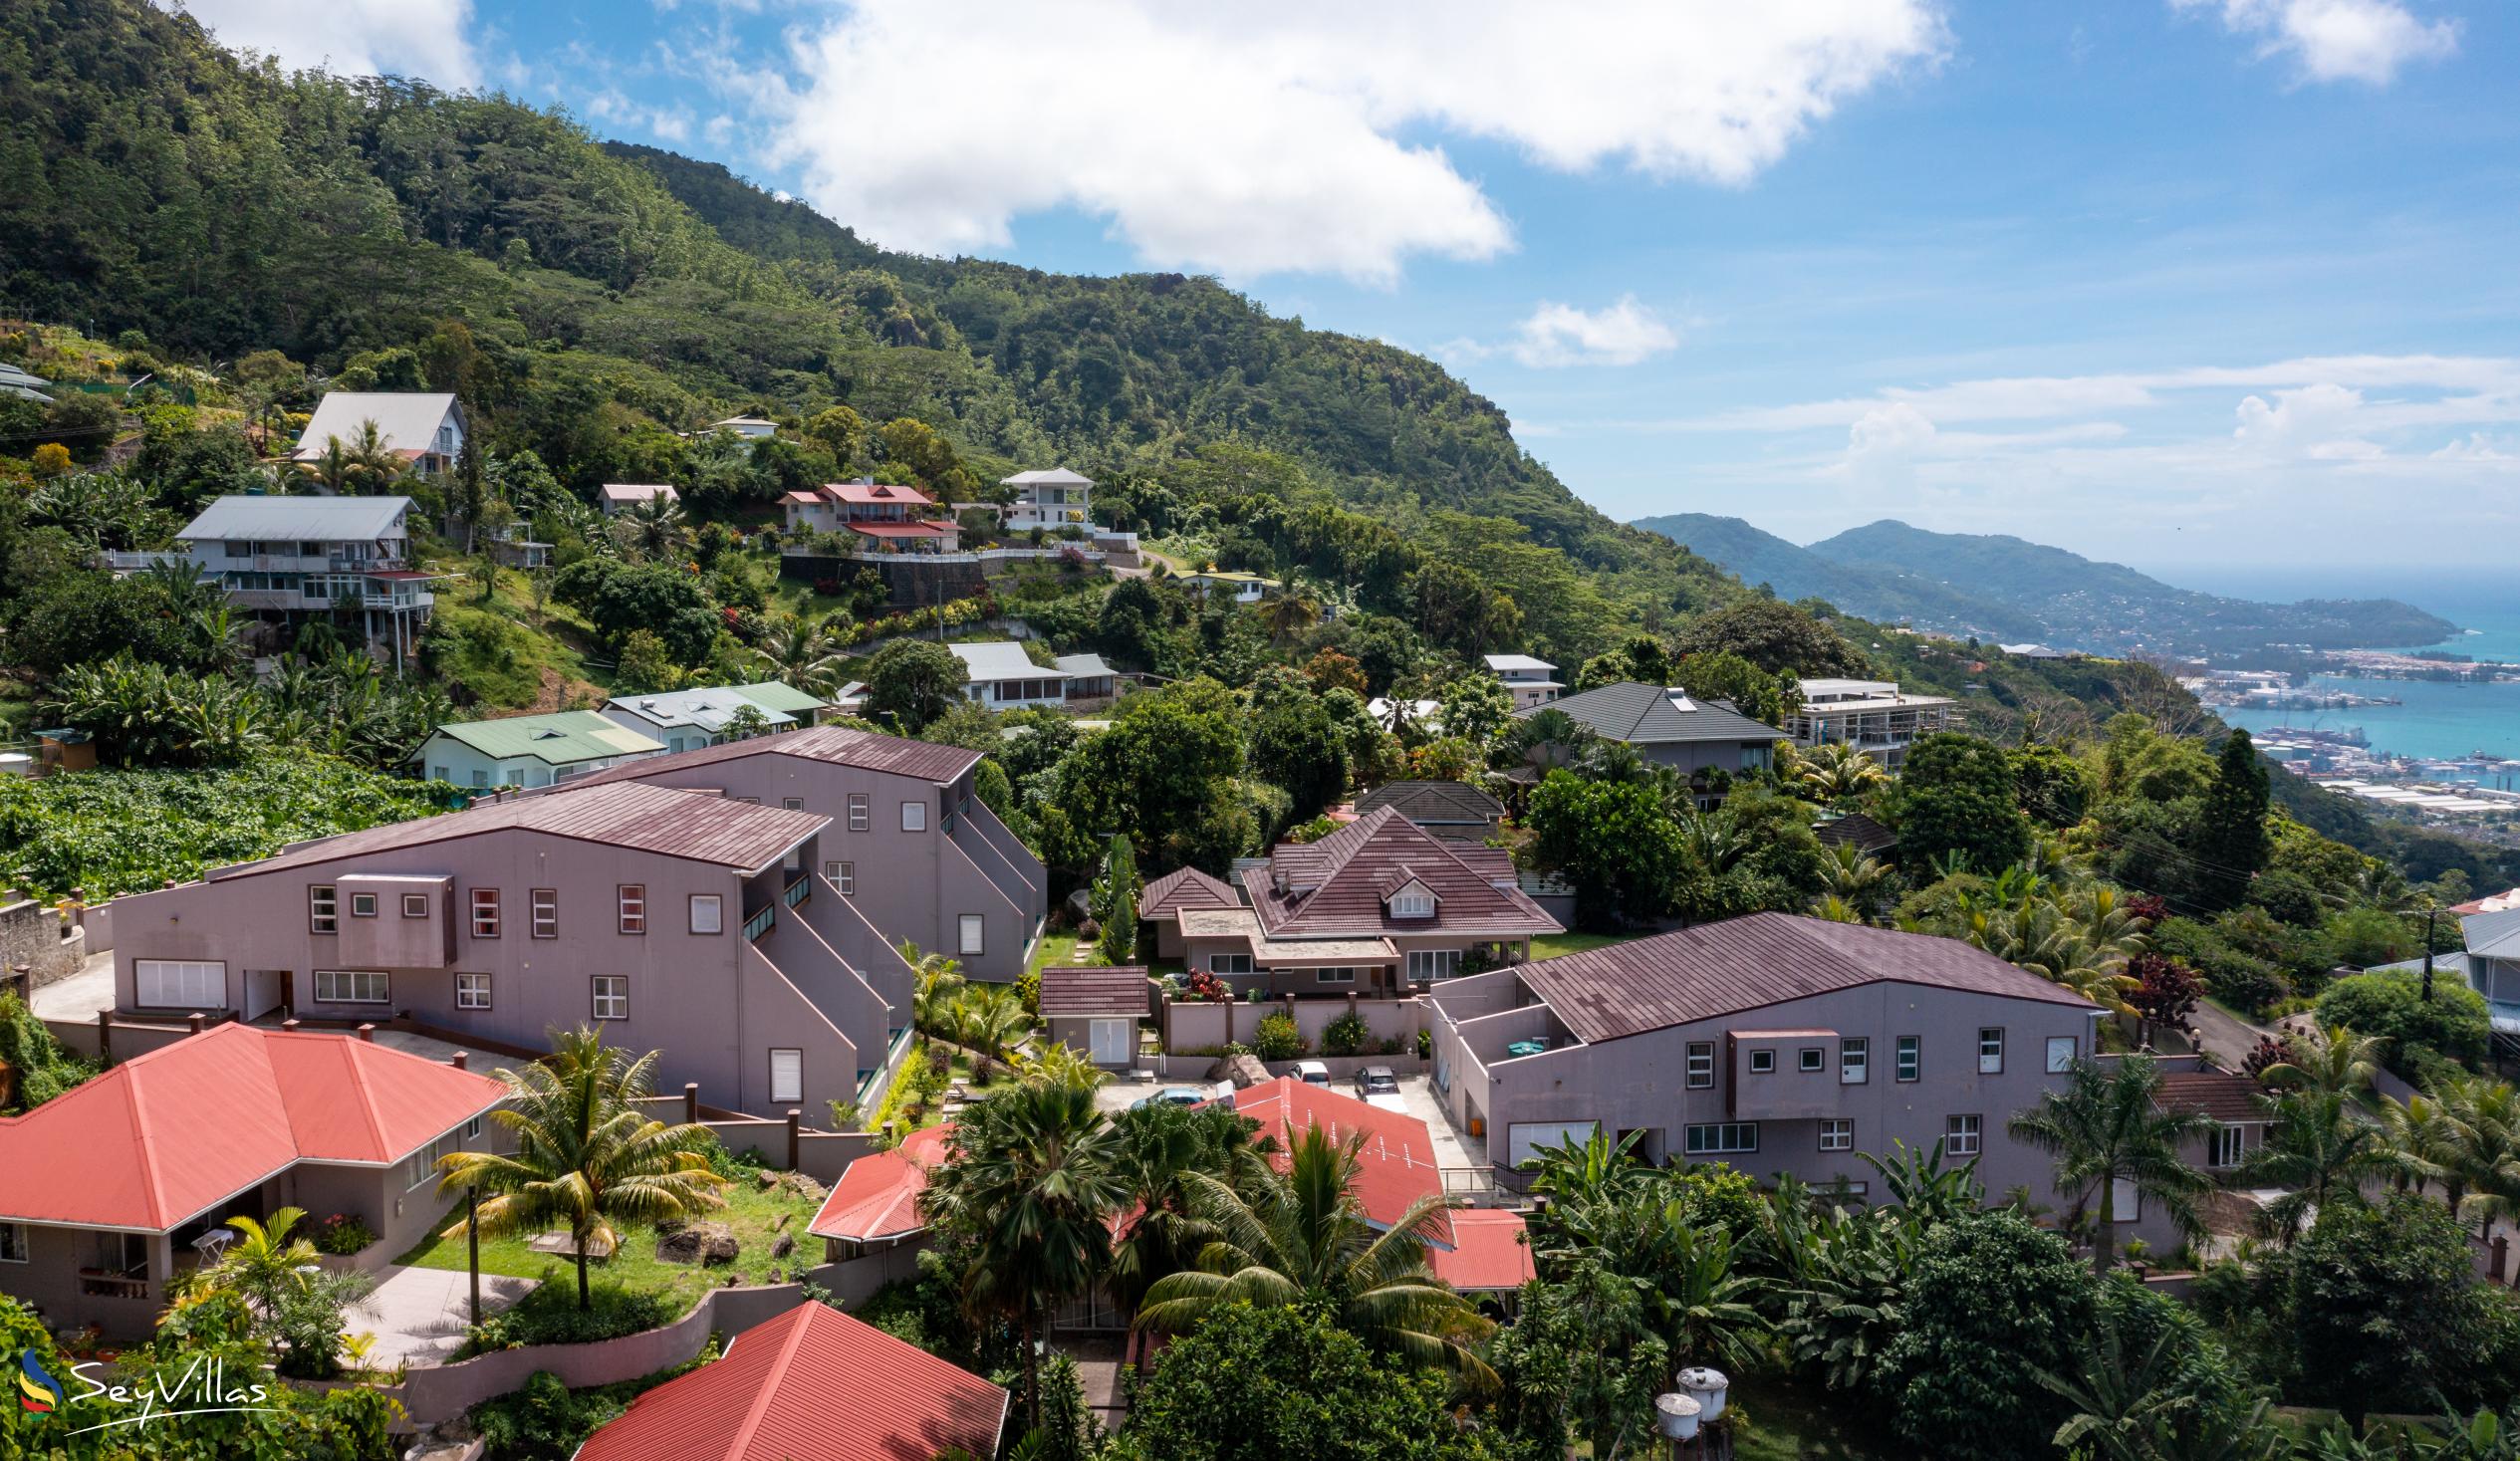 Photo 1: Cliffhanger Villas - Outdoor area - Mahé (Seychelles)